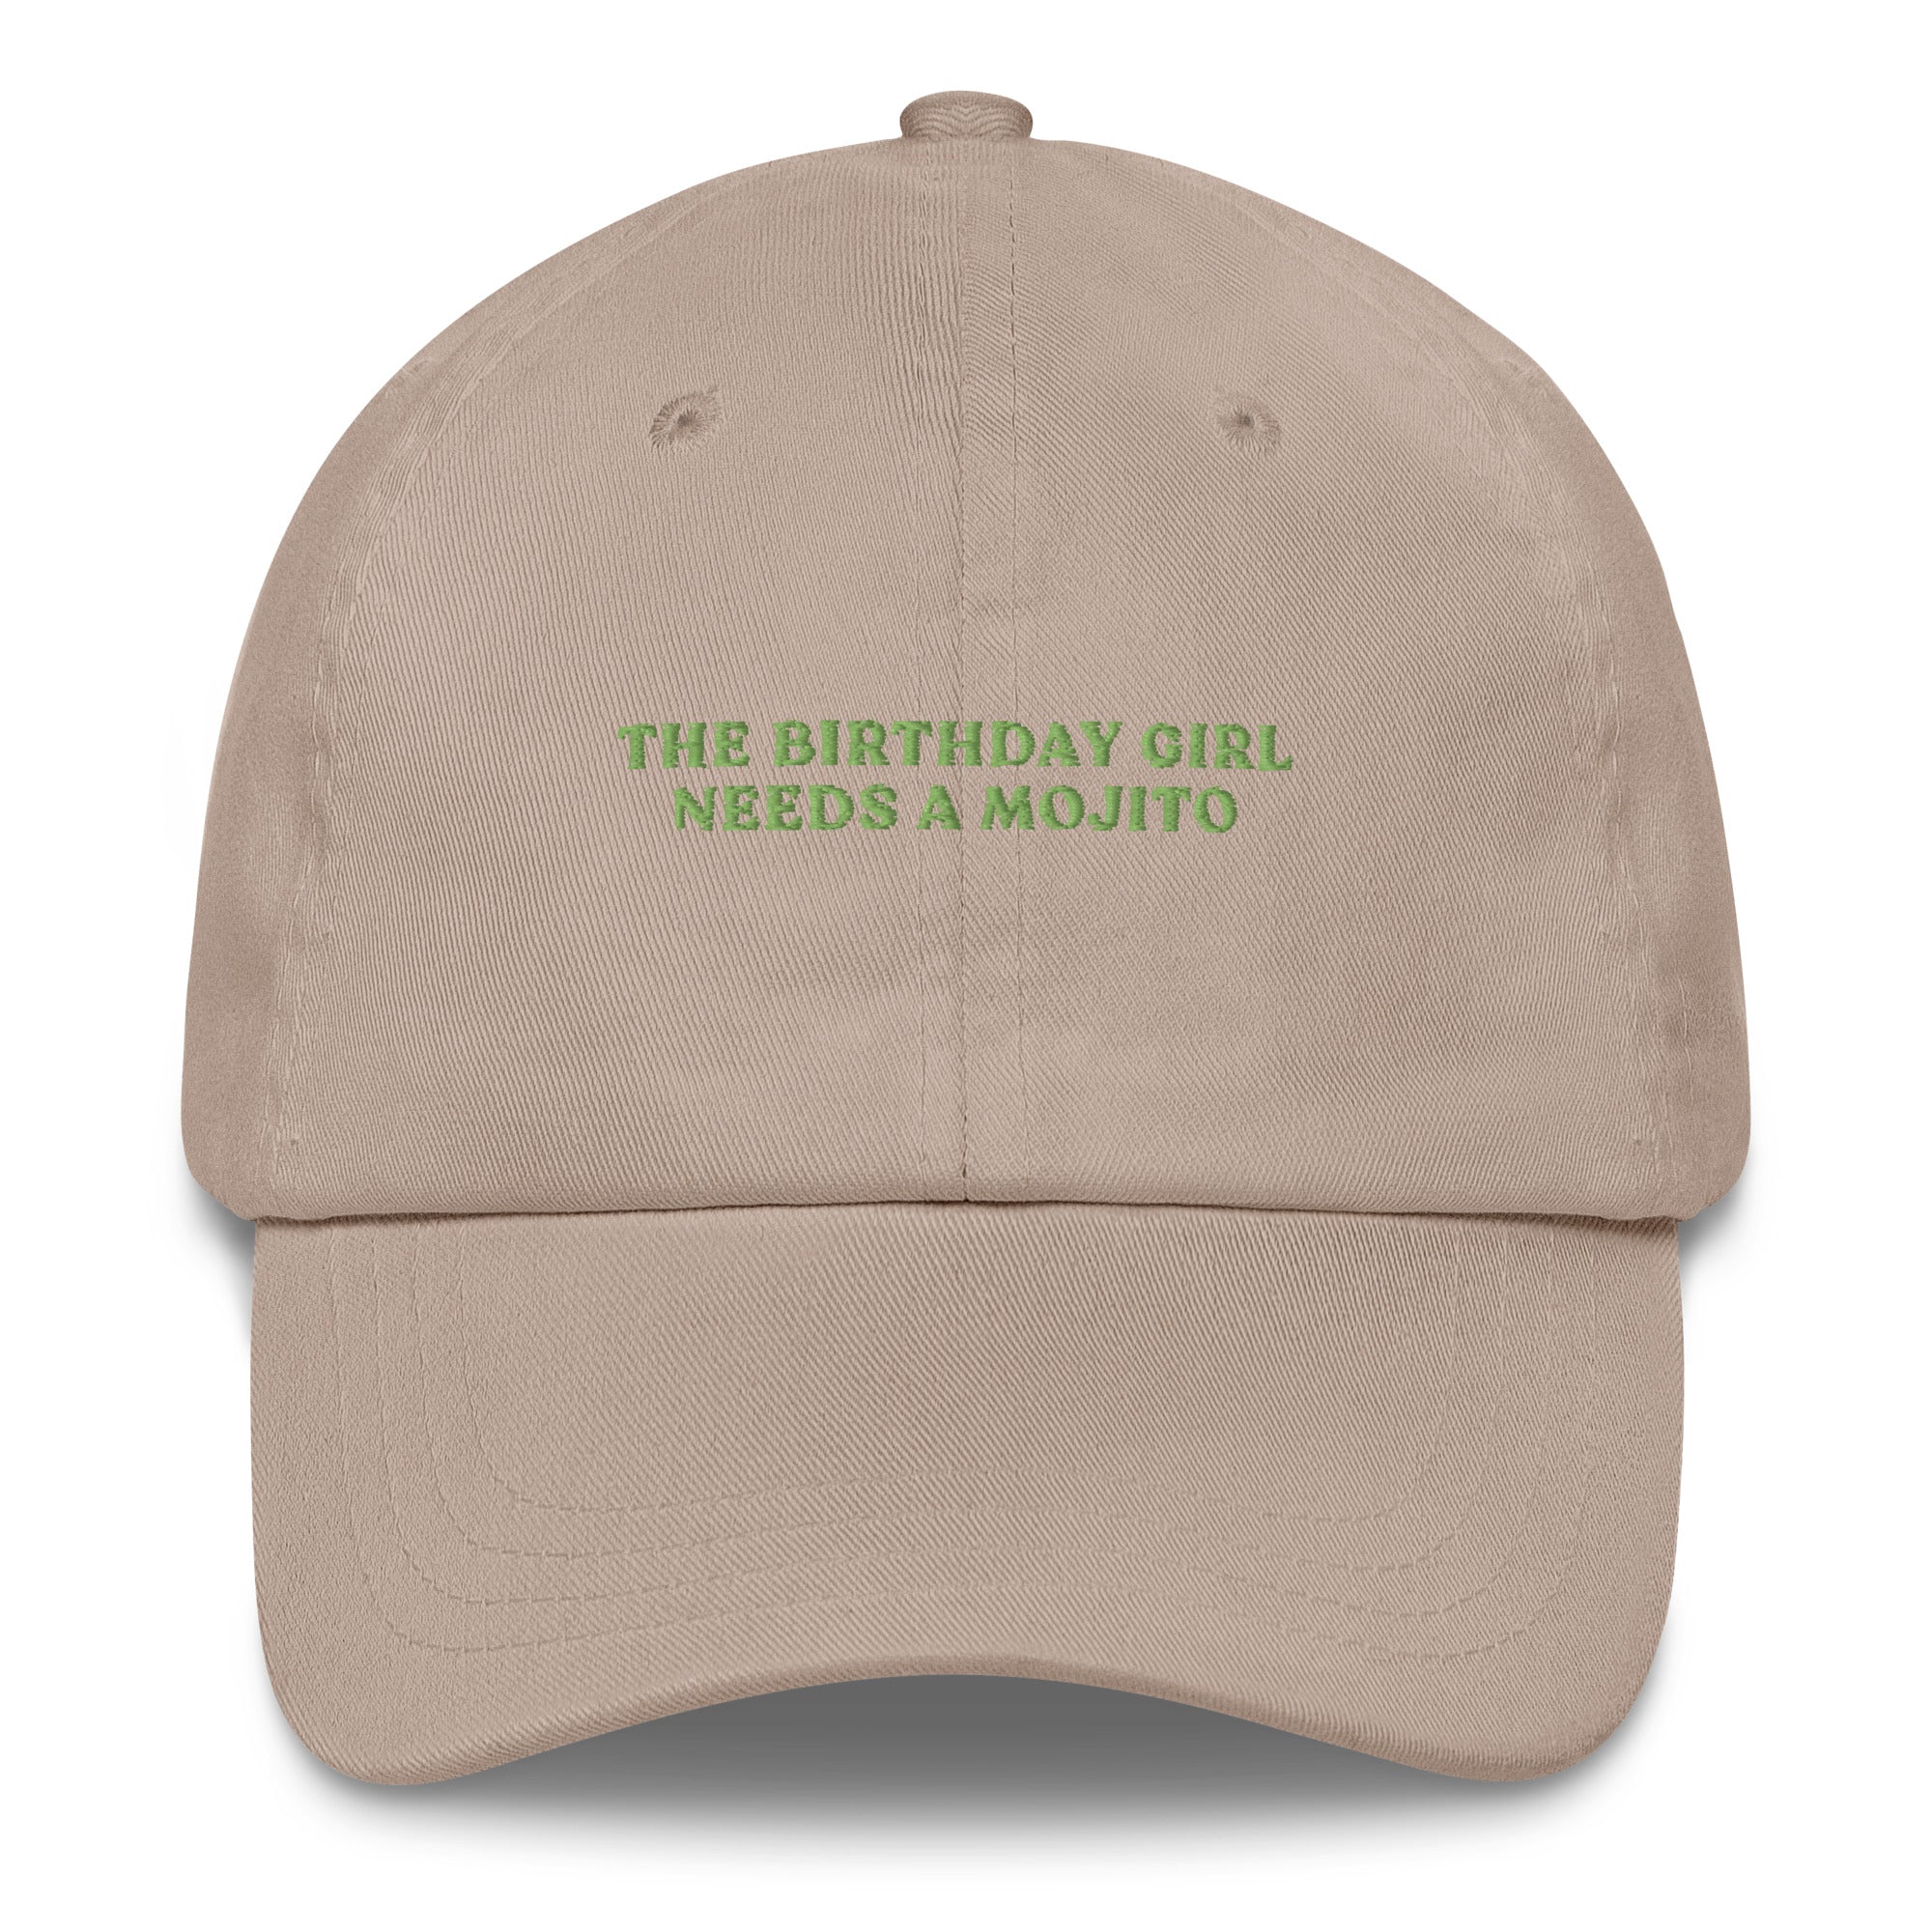 The Birthday Girl needs a Mojito - Cap